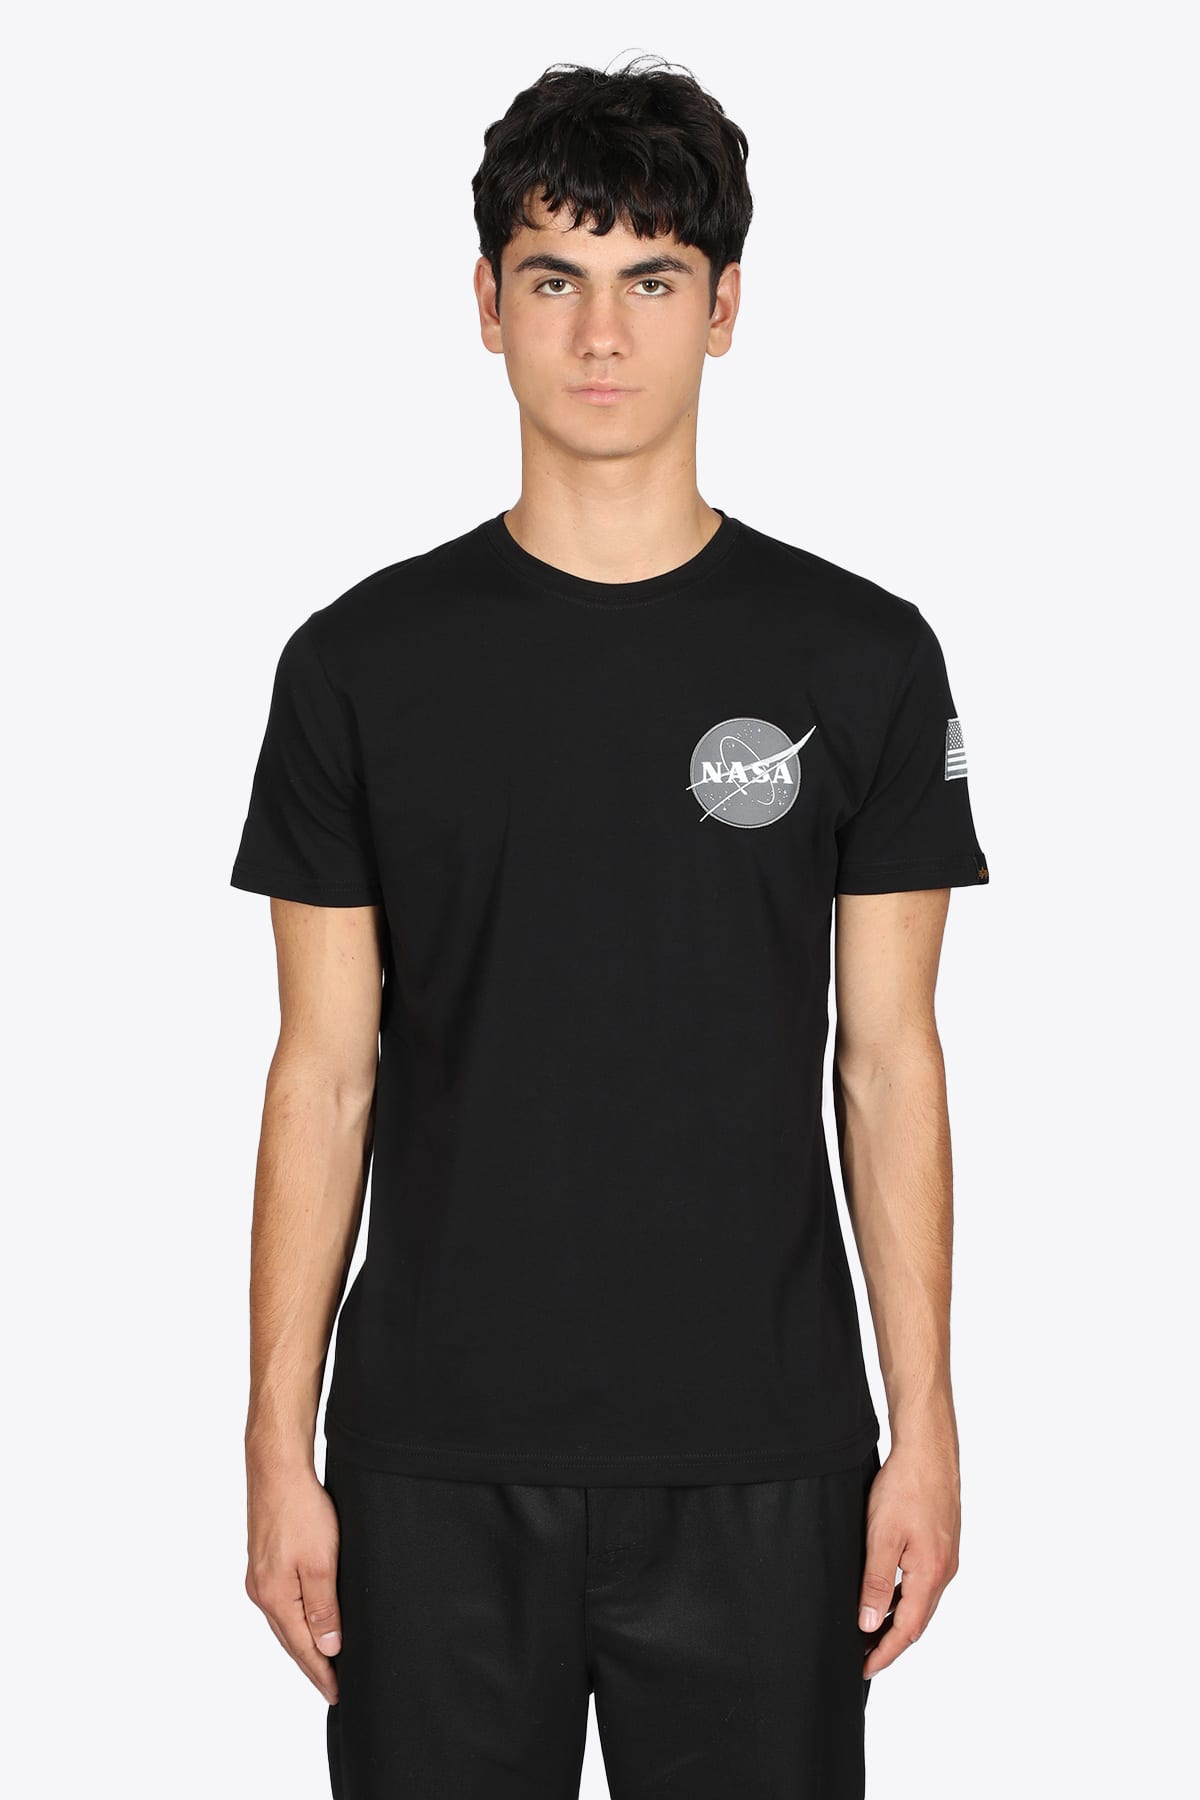 Alpha Industries Space Shuttle T-shirt Black cotton space shuttle t-shirt